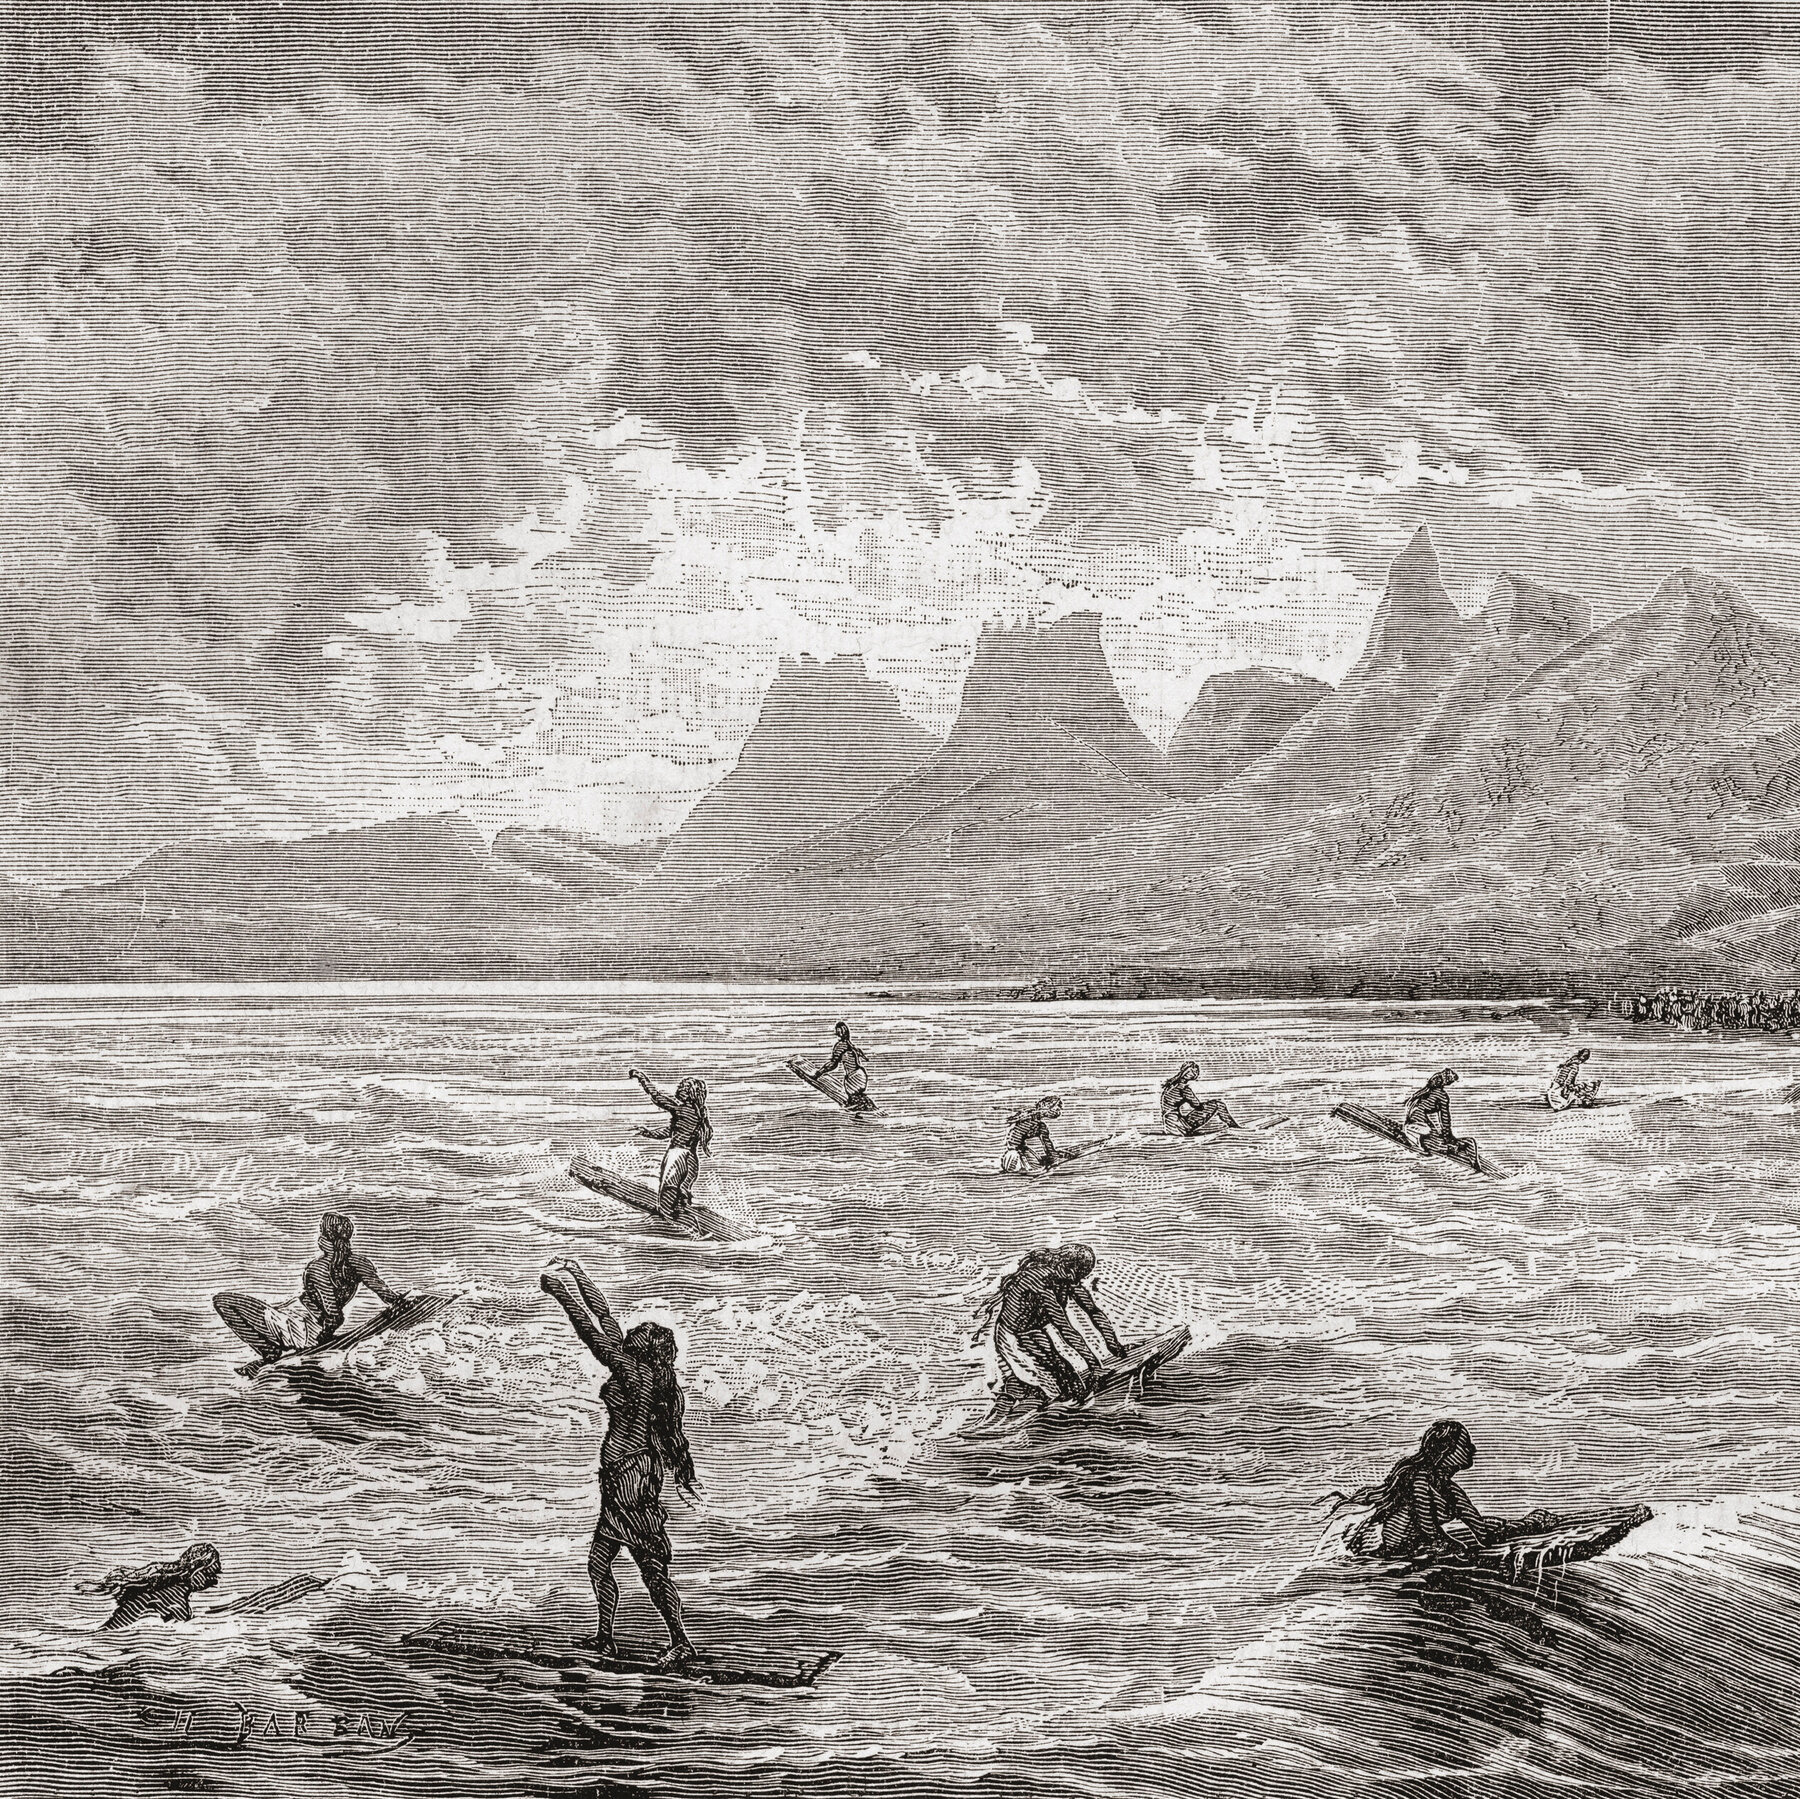 Polynesian Bare Surfing